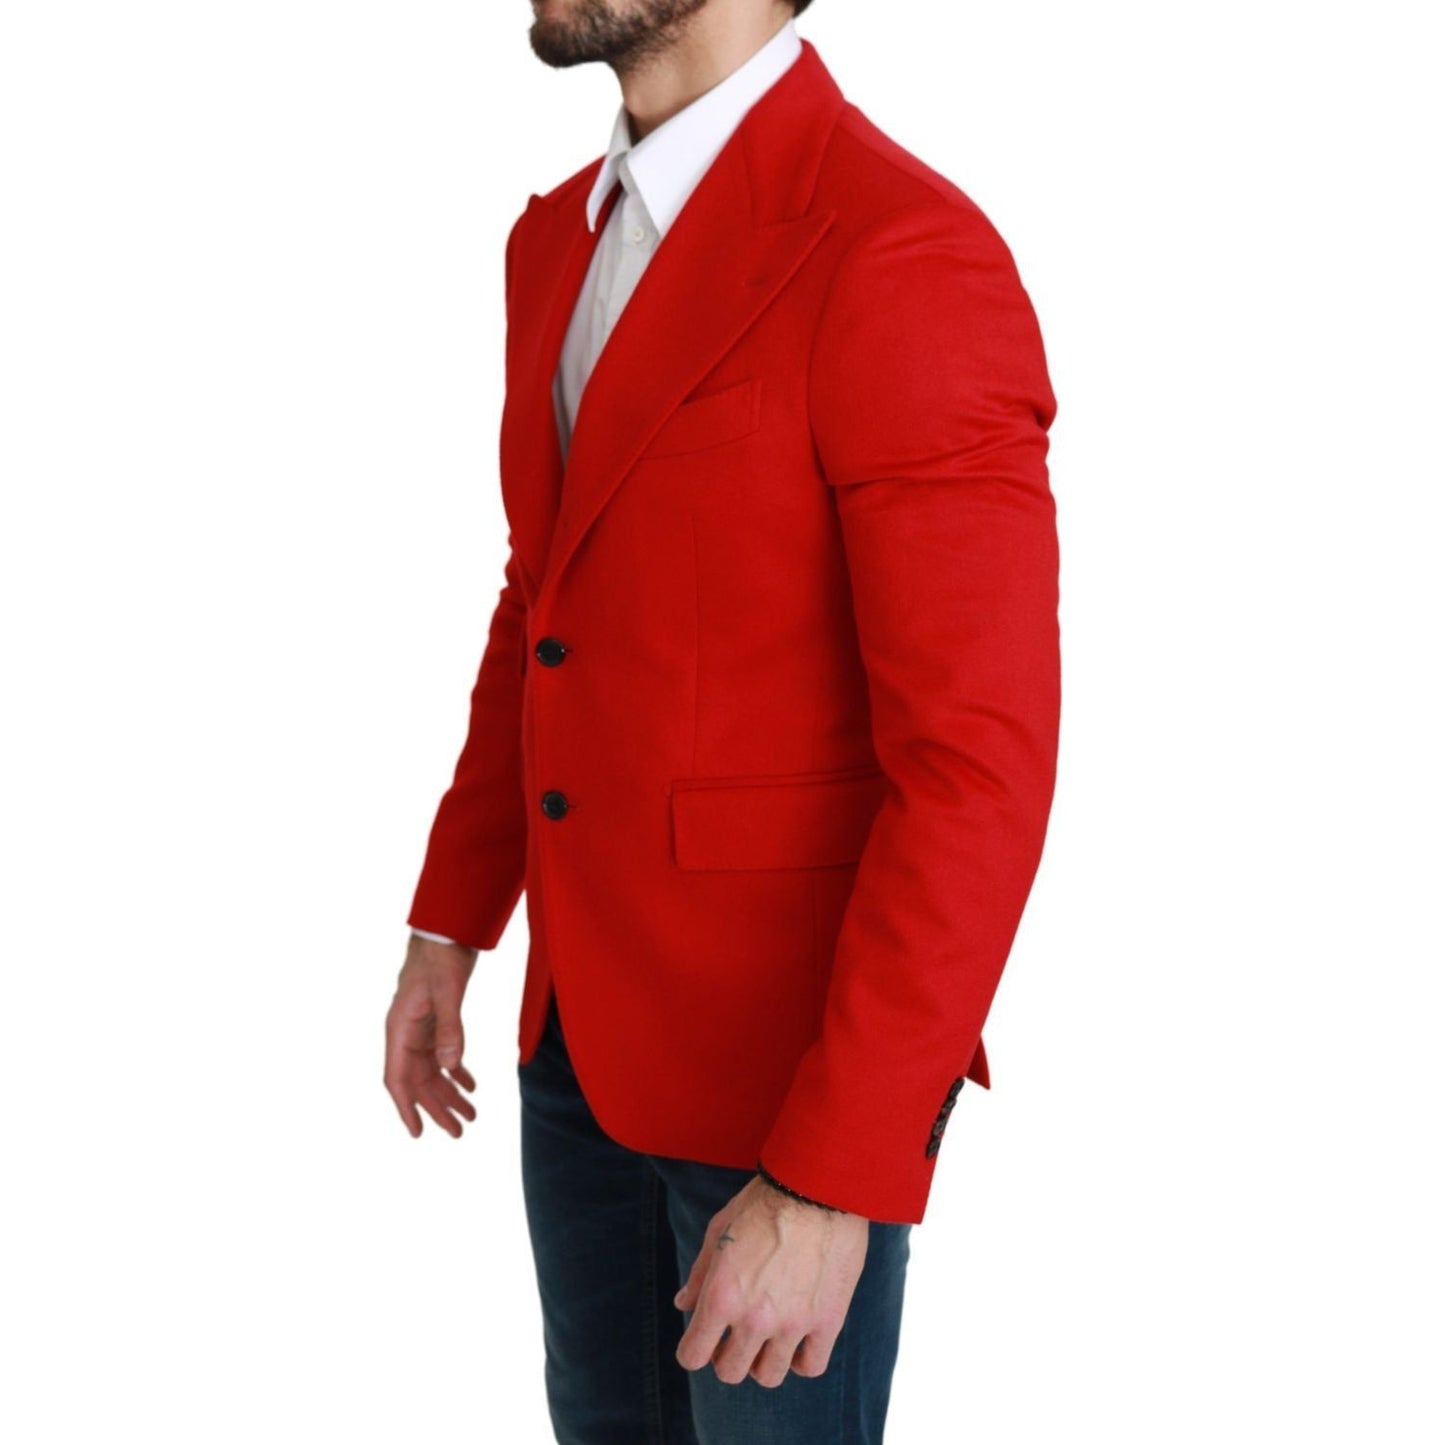 Dolce & Gabbana Elegant Red Cashmere Slim Fit Blazer red-cashmere-slim-fit-coat-jacket-blazer IMG_1215-scaled-7edb7bd6-779.jpg